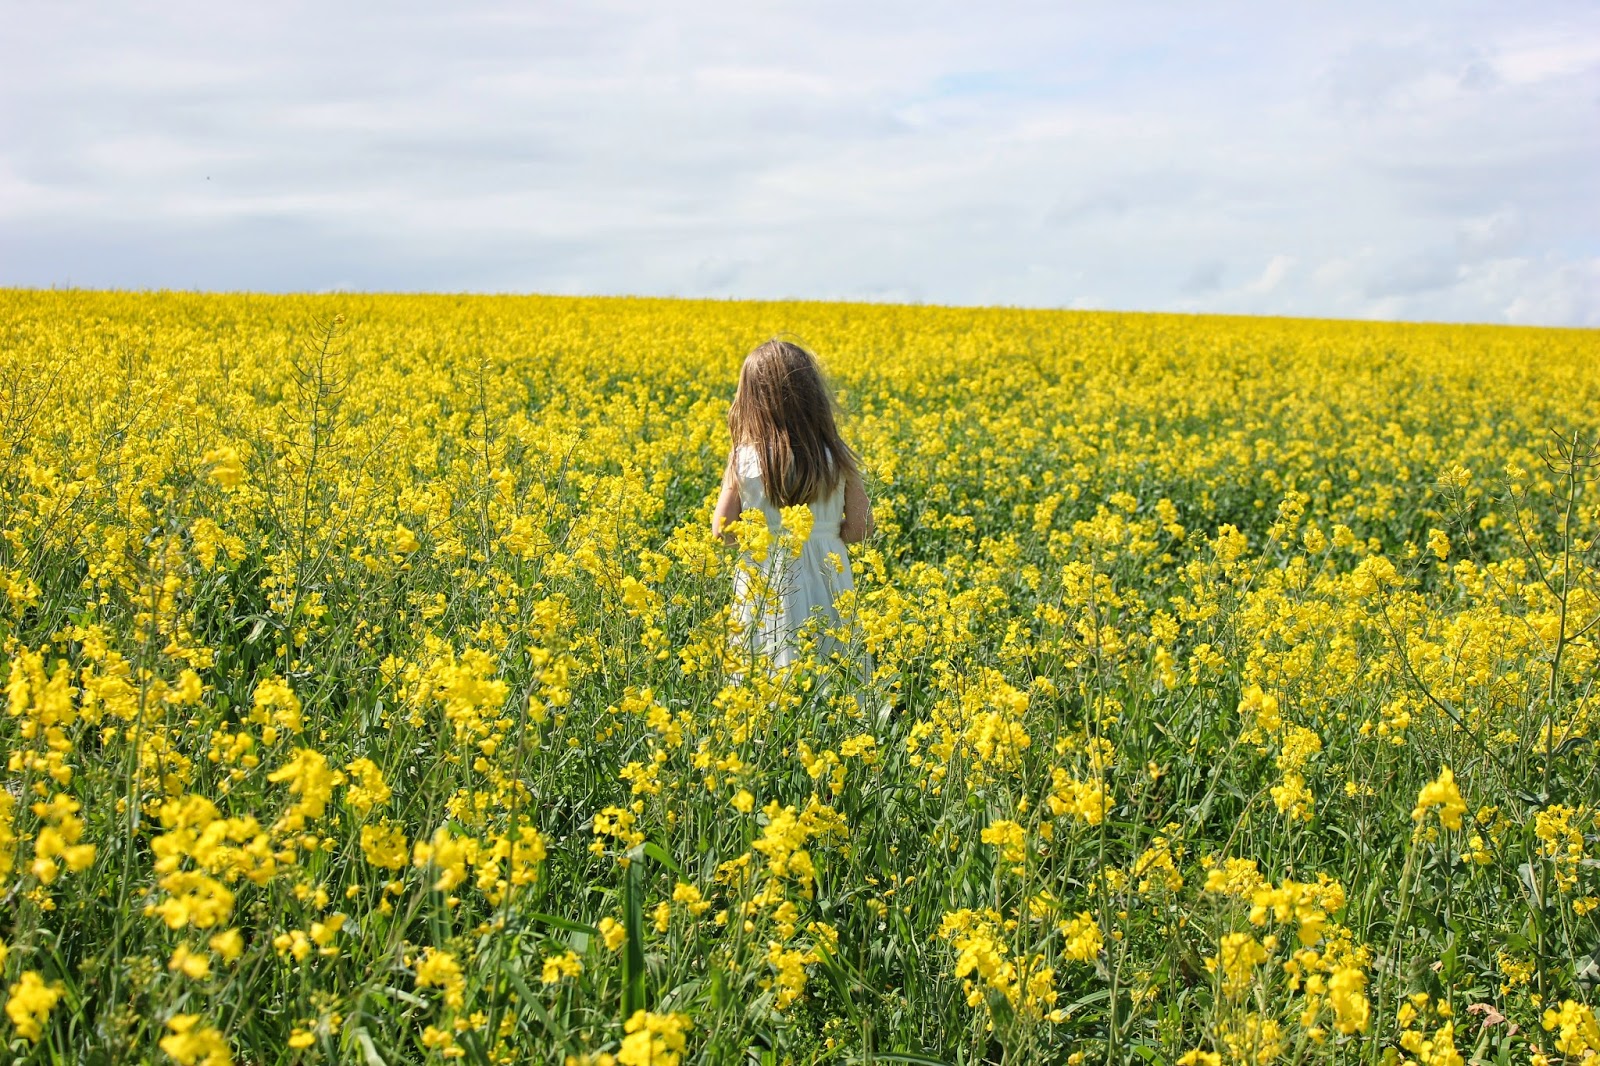 Girl in a golden field of sunshine